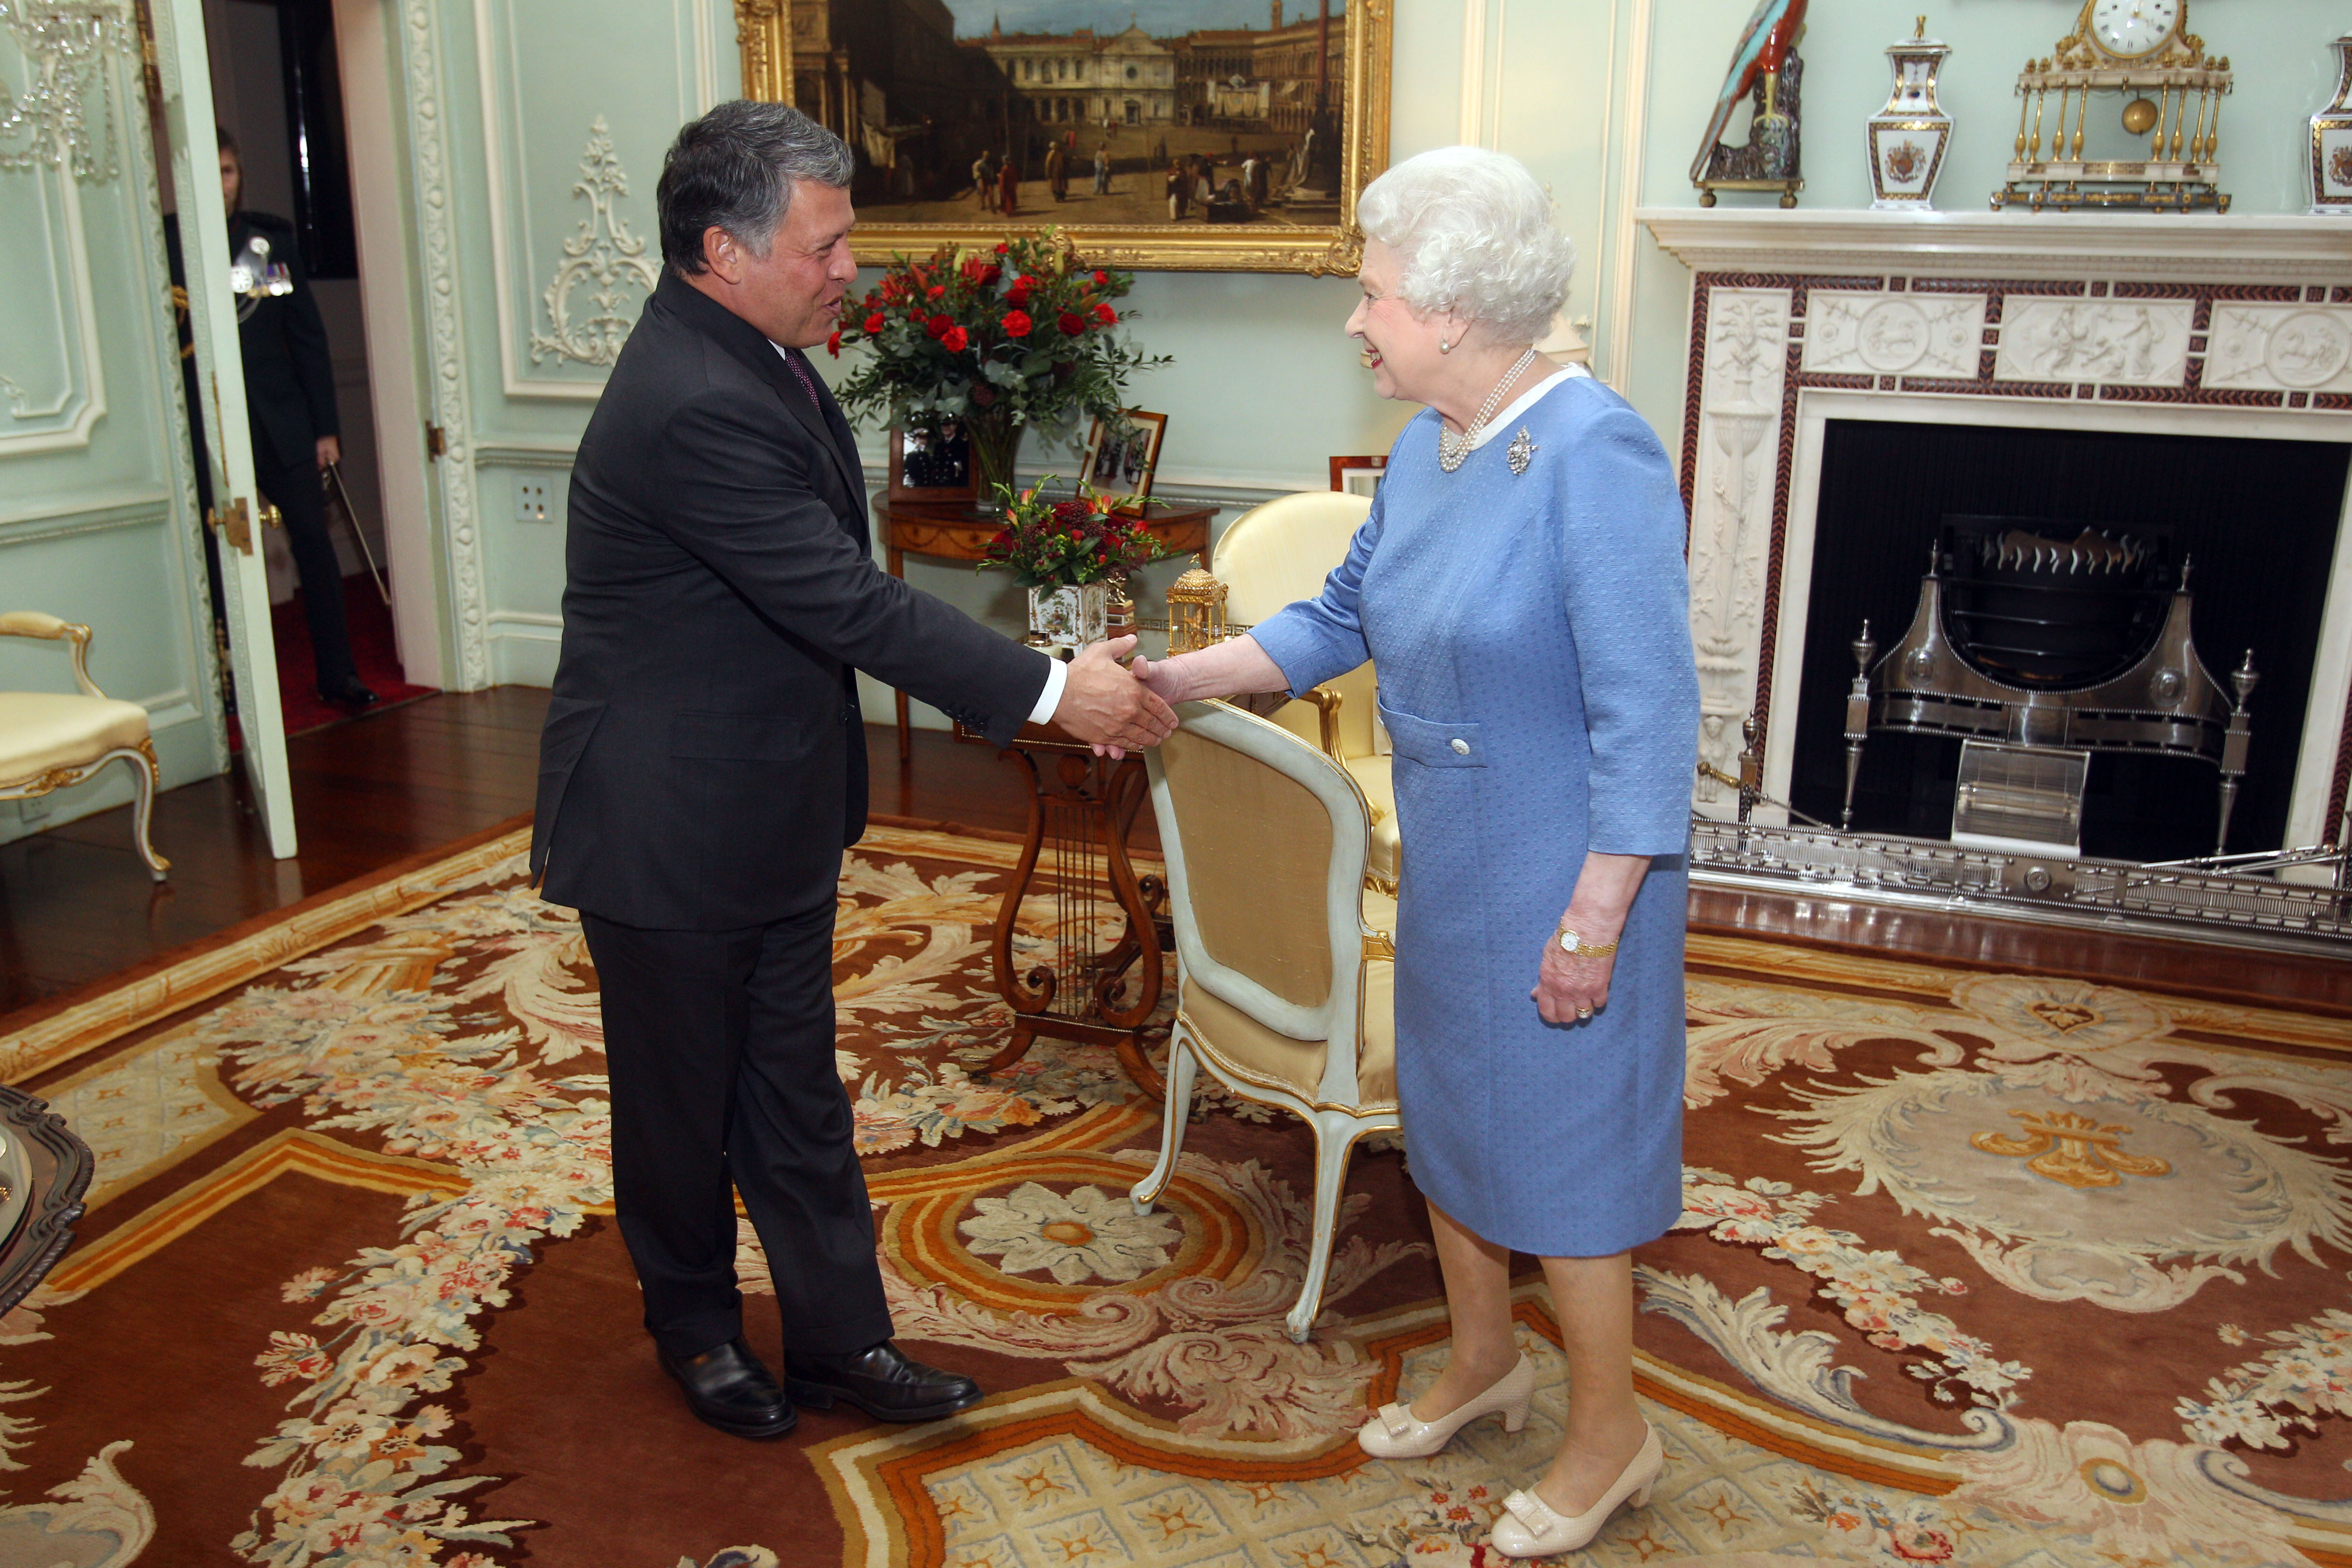 Queen Elizabeth II greets King Abdullah II of Jordan at Buckingham Palace in 2011.